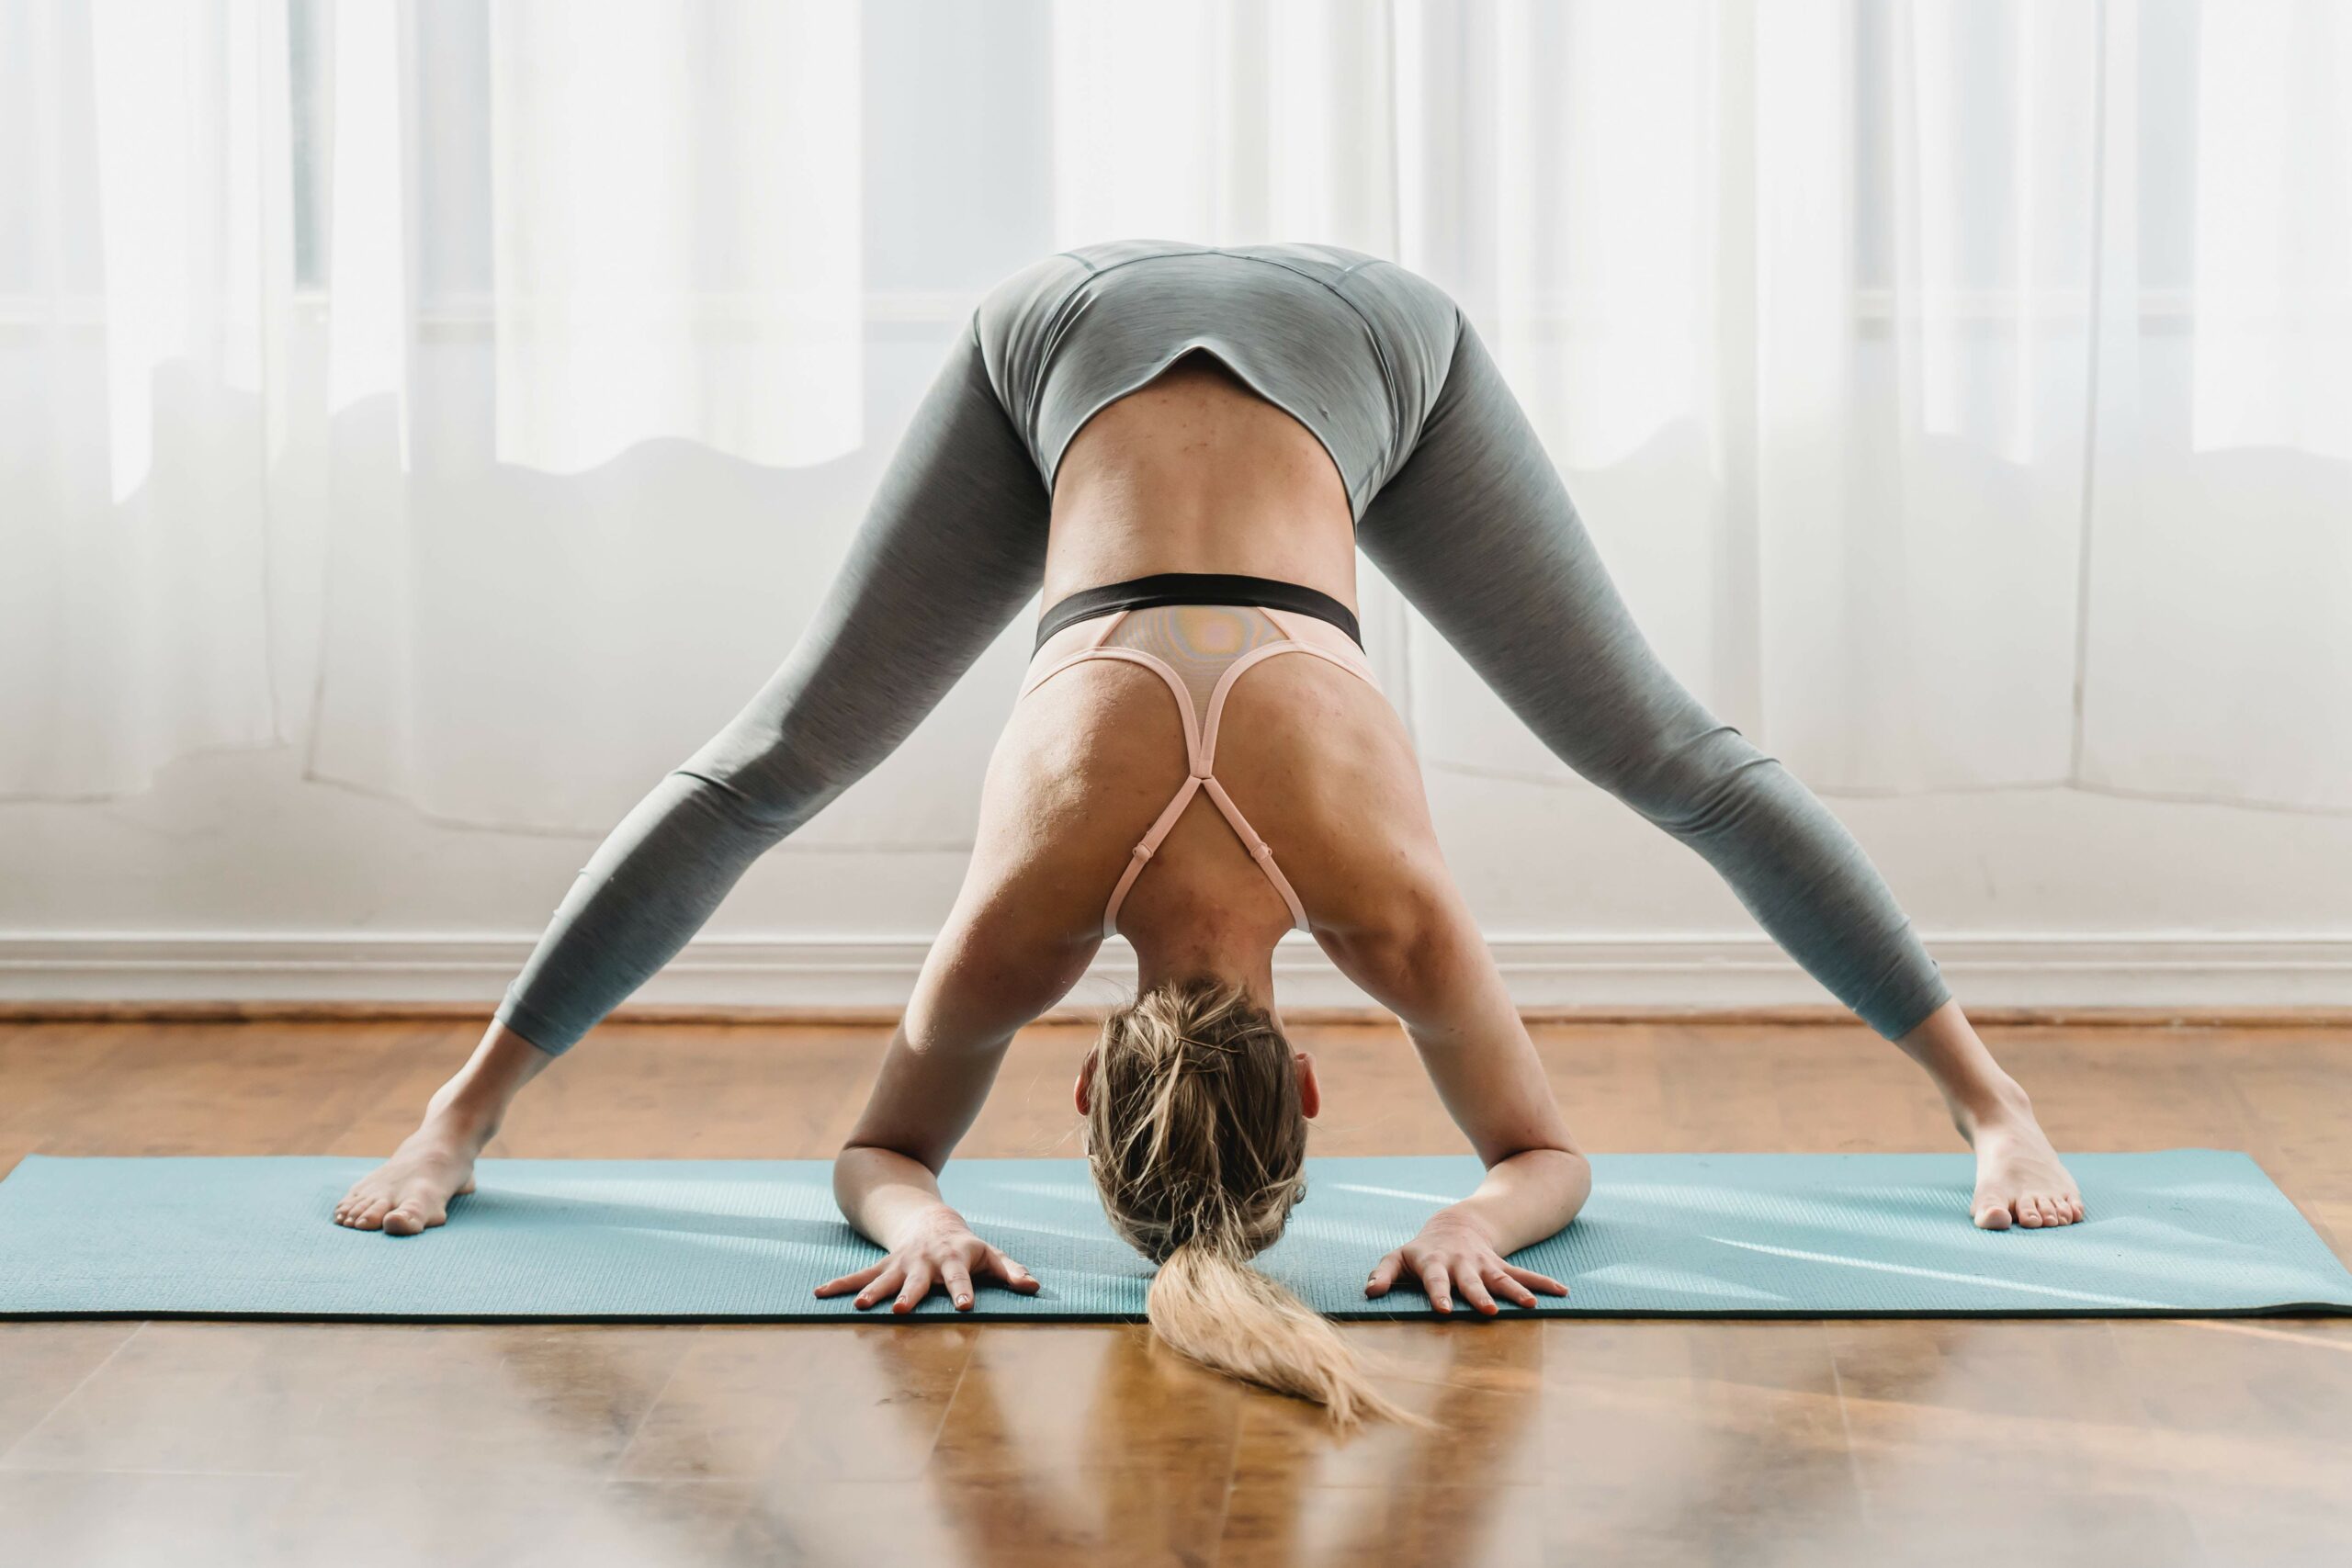 6 standing yoga exercises to improve balance